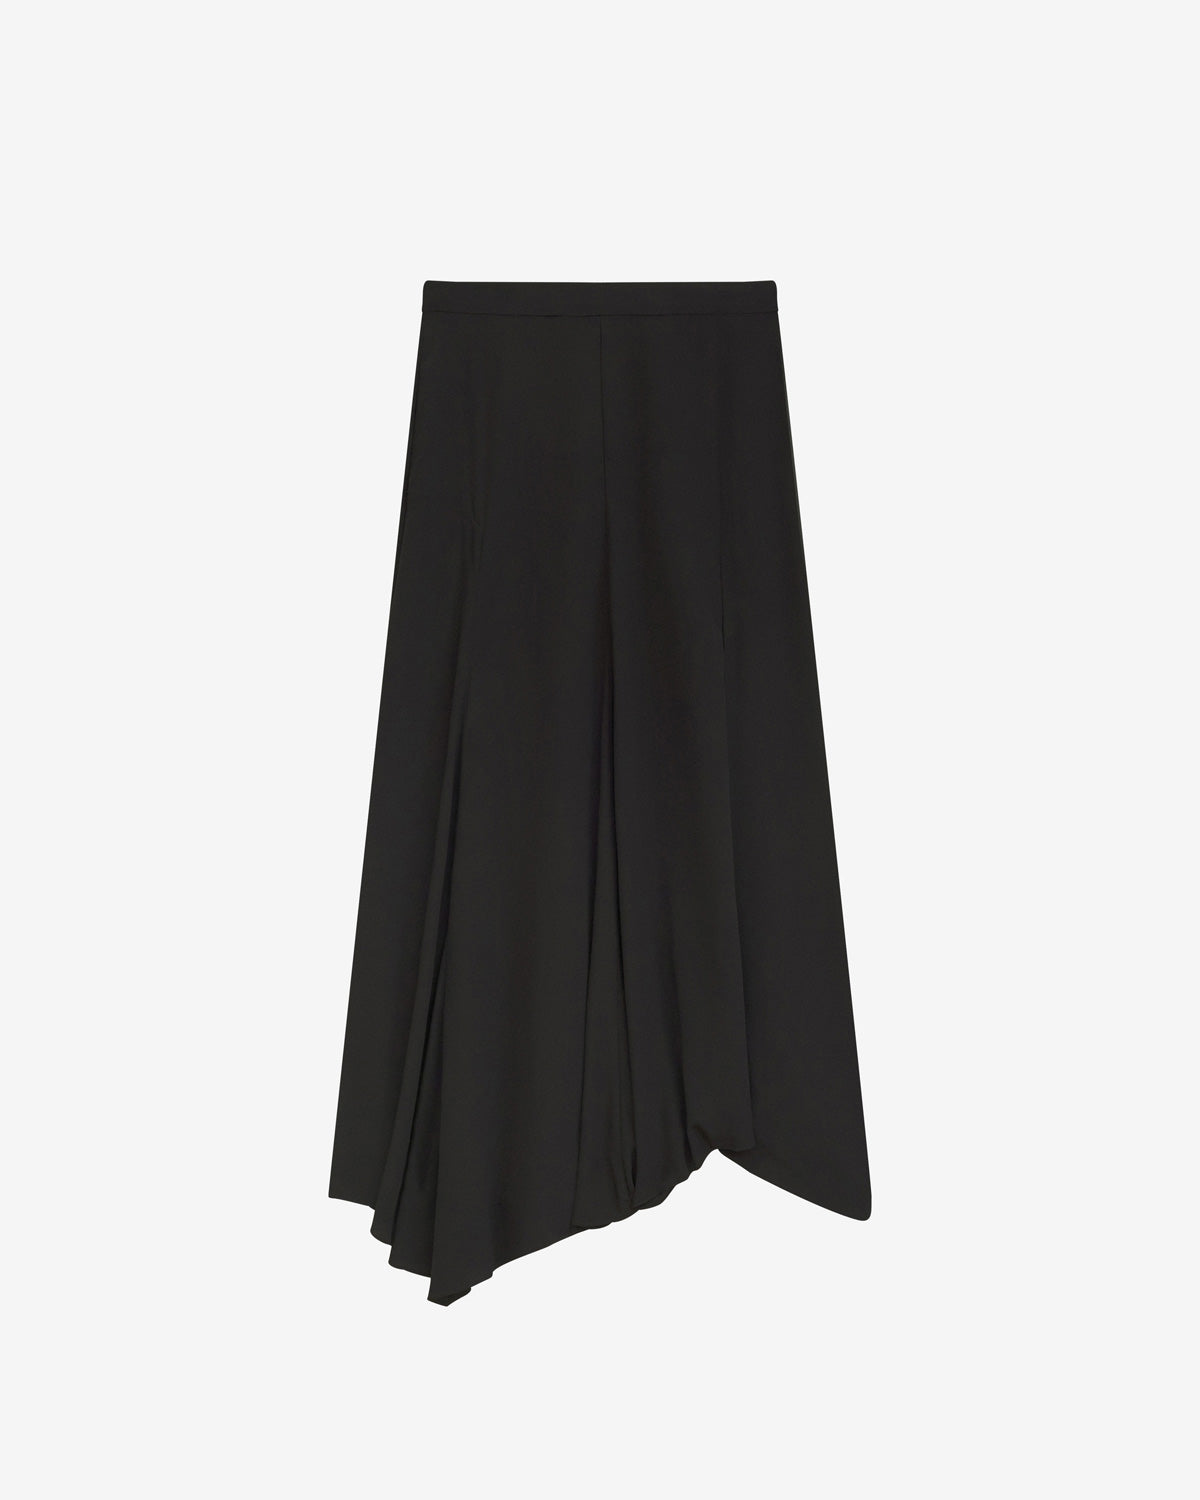 Hortensia スカート Woman 黒 1